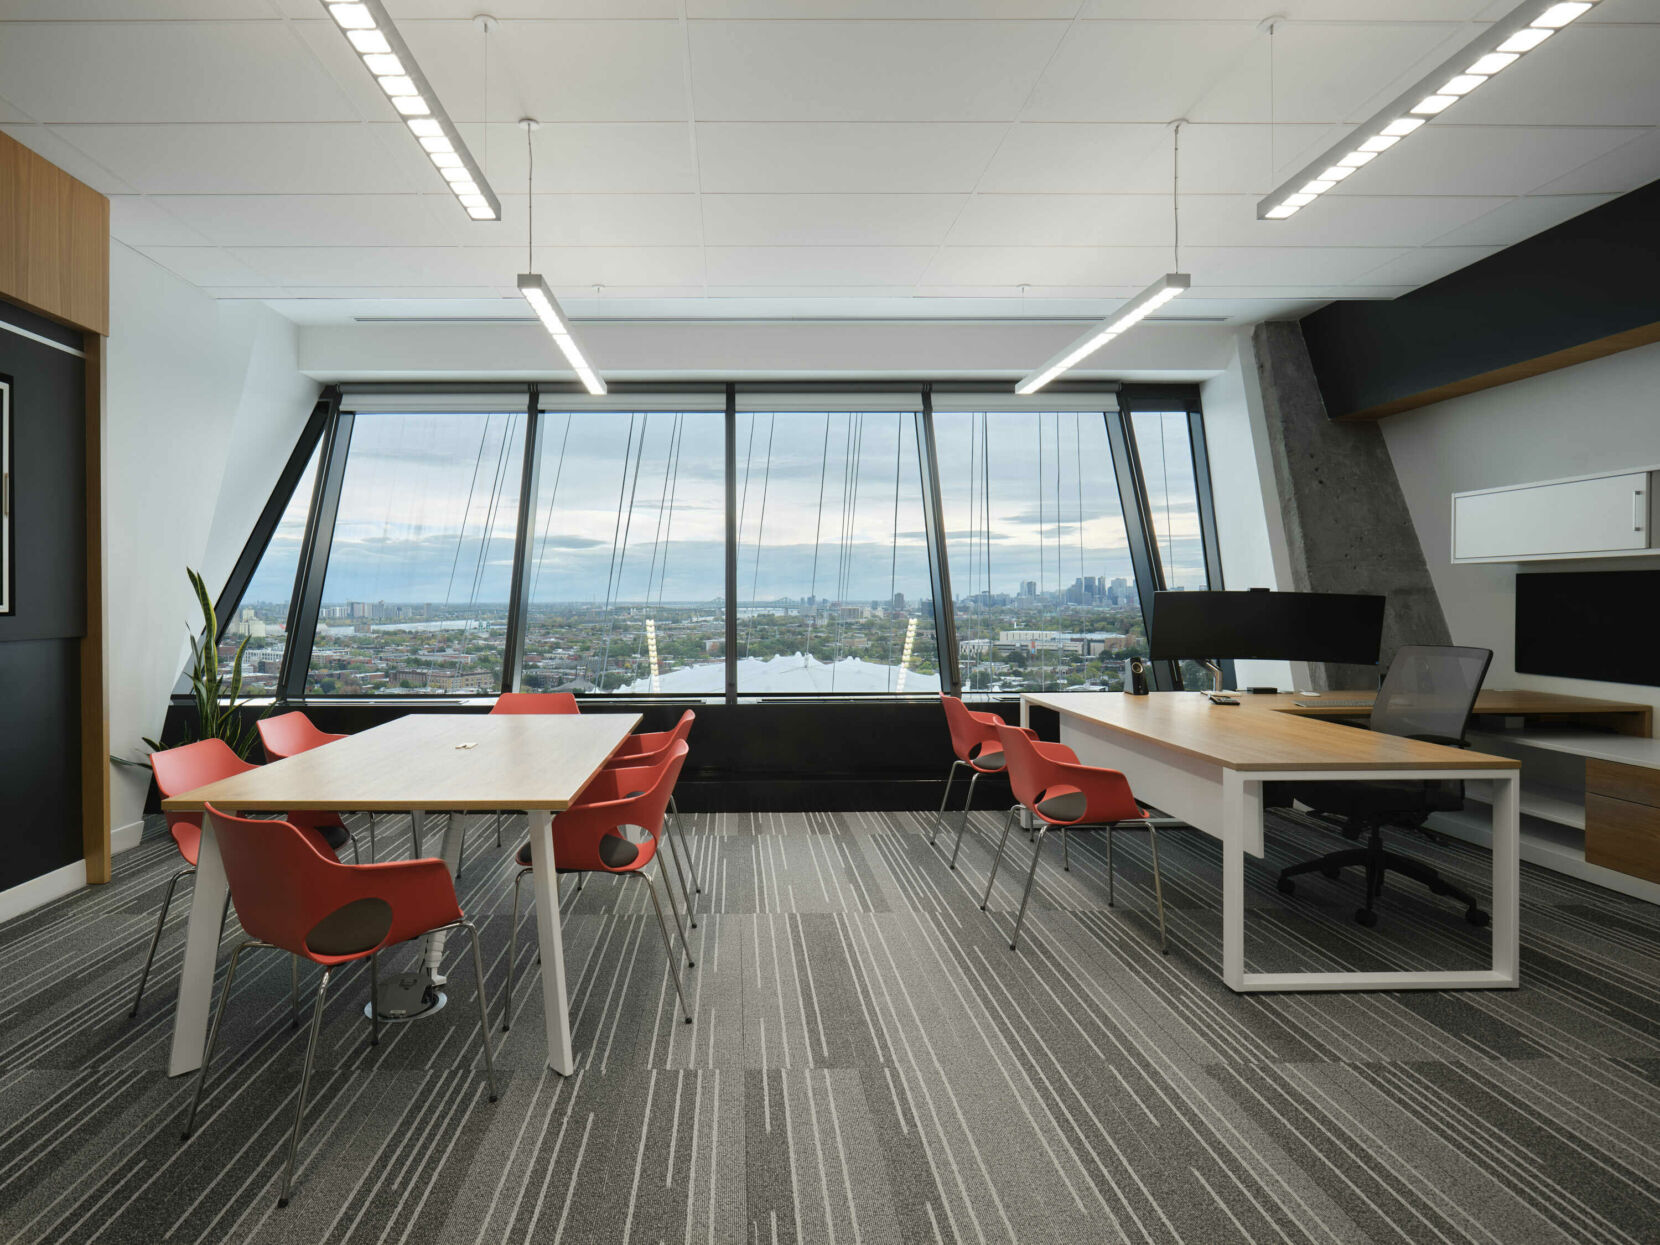 SIGMA-RH: Innovative Offices, Inspiring View